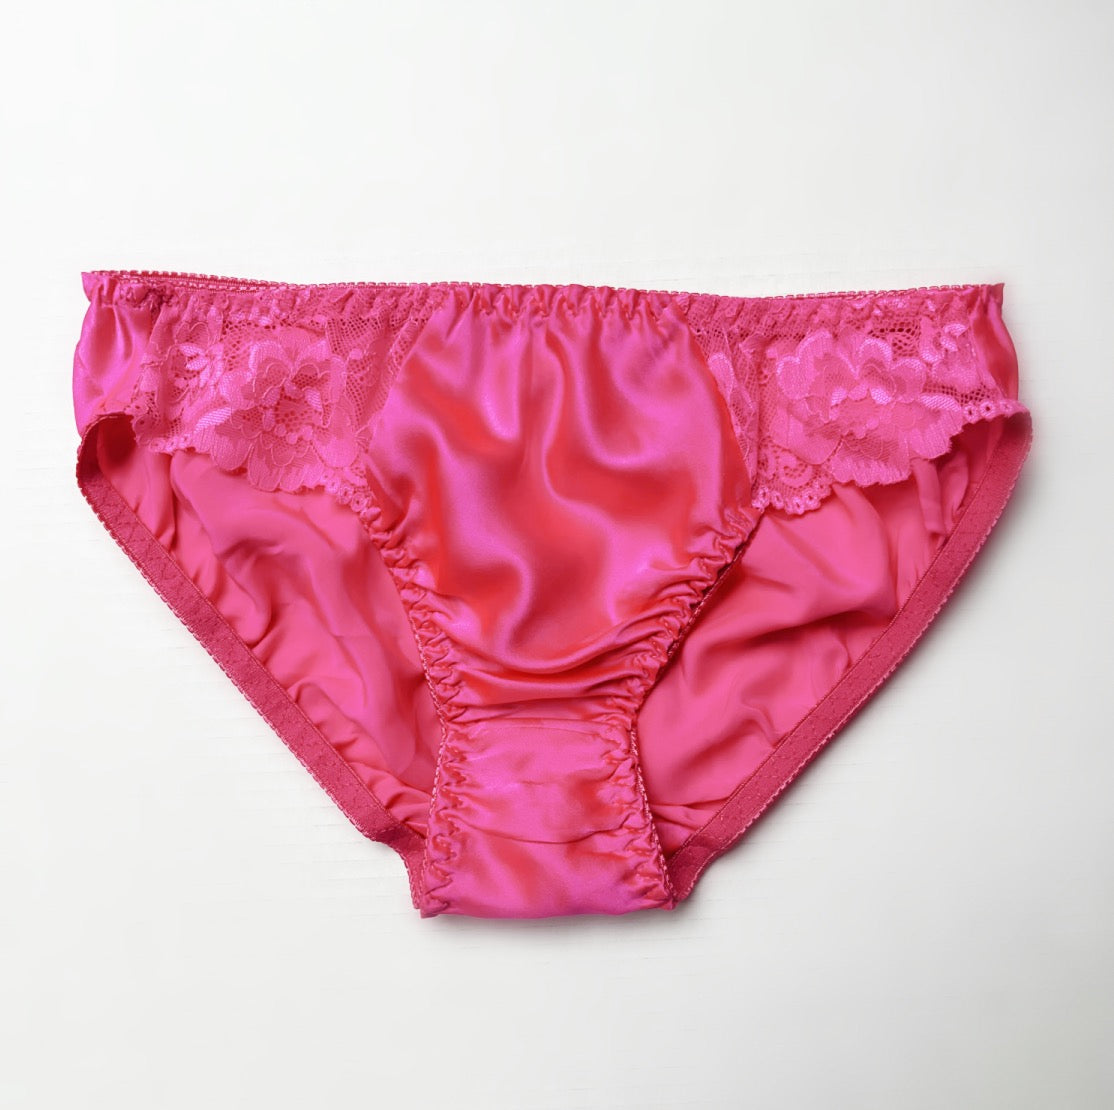 Hot pink Light Blue women's silk underwear, Made in Canada silk lingerie